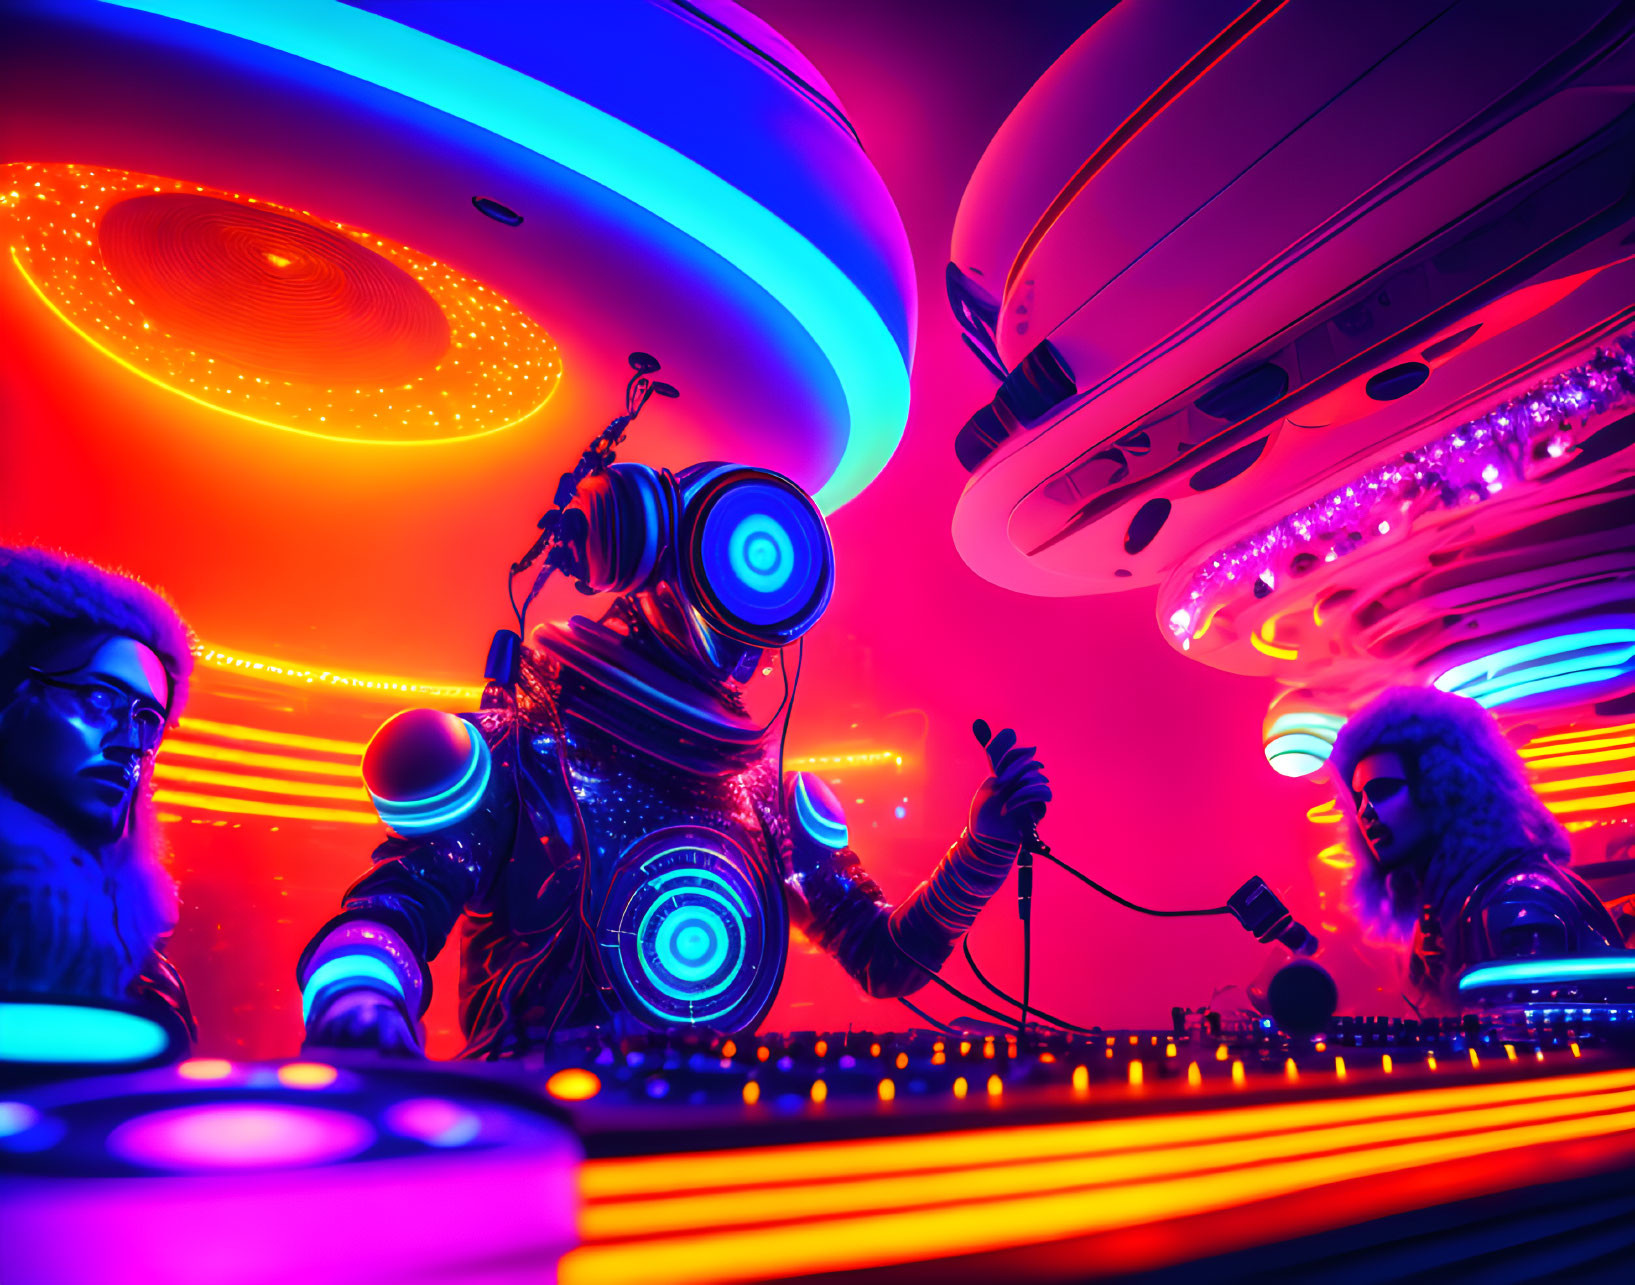 Futuristic DJ in neon-lit club with stylish partygoers